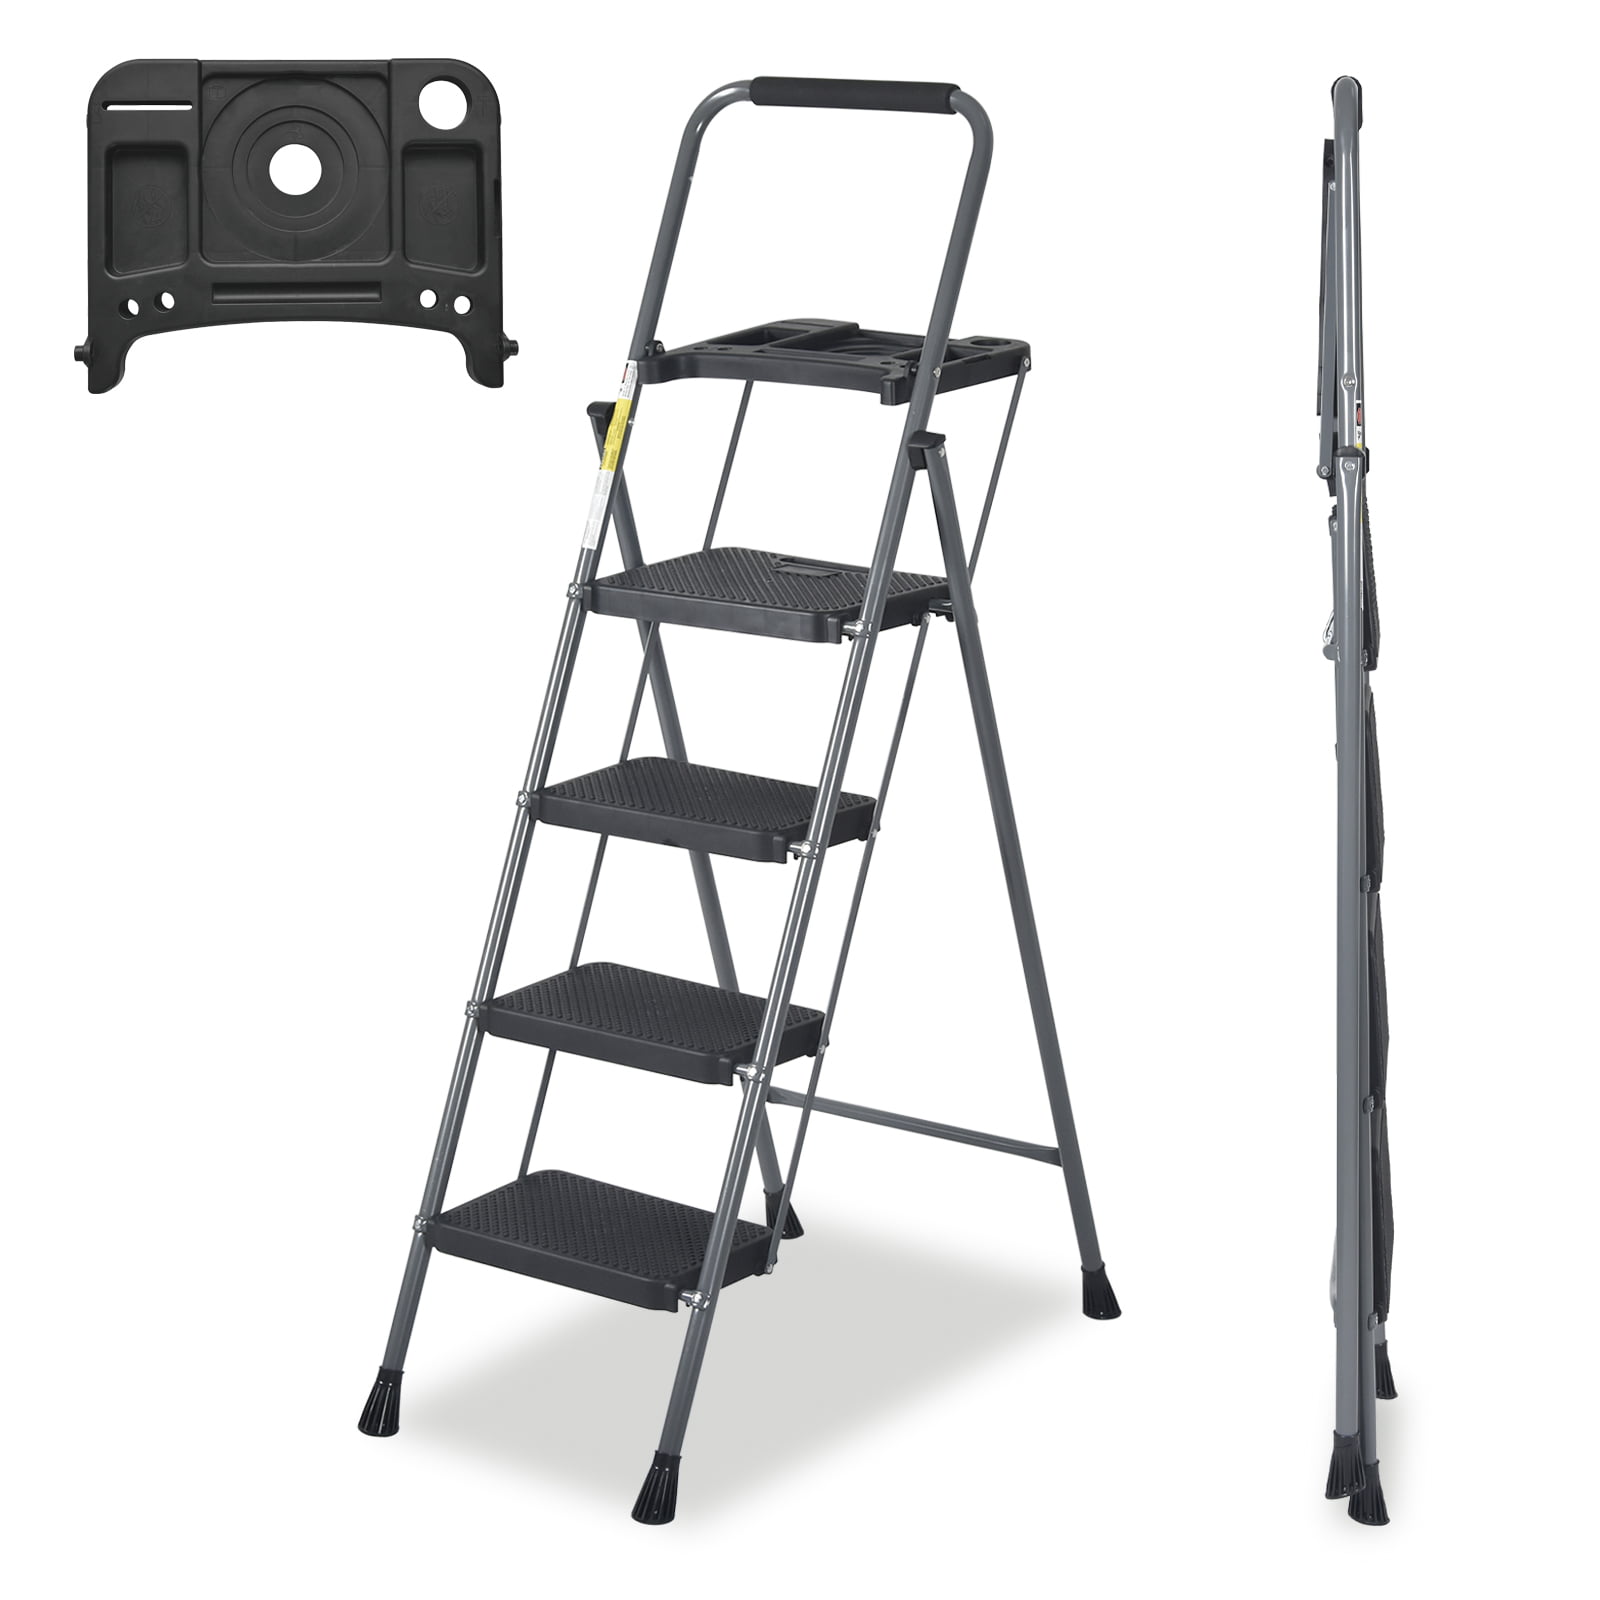 Step Aluminium Ladder Folding Ladder with Top Storage Tray Lightweight Anti-Slip 